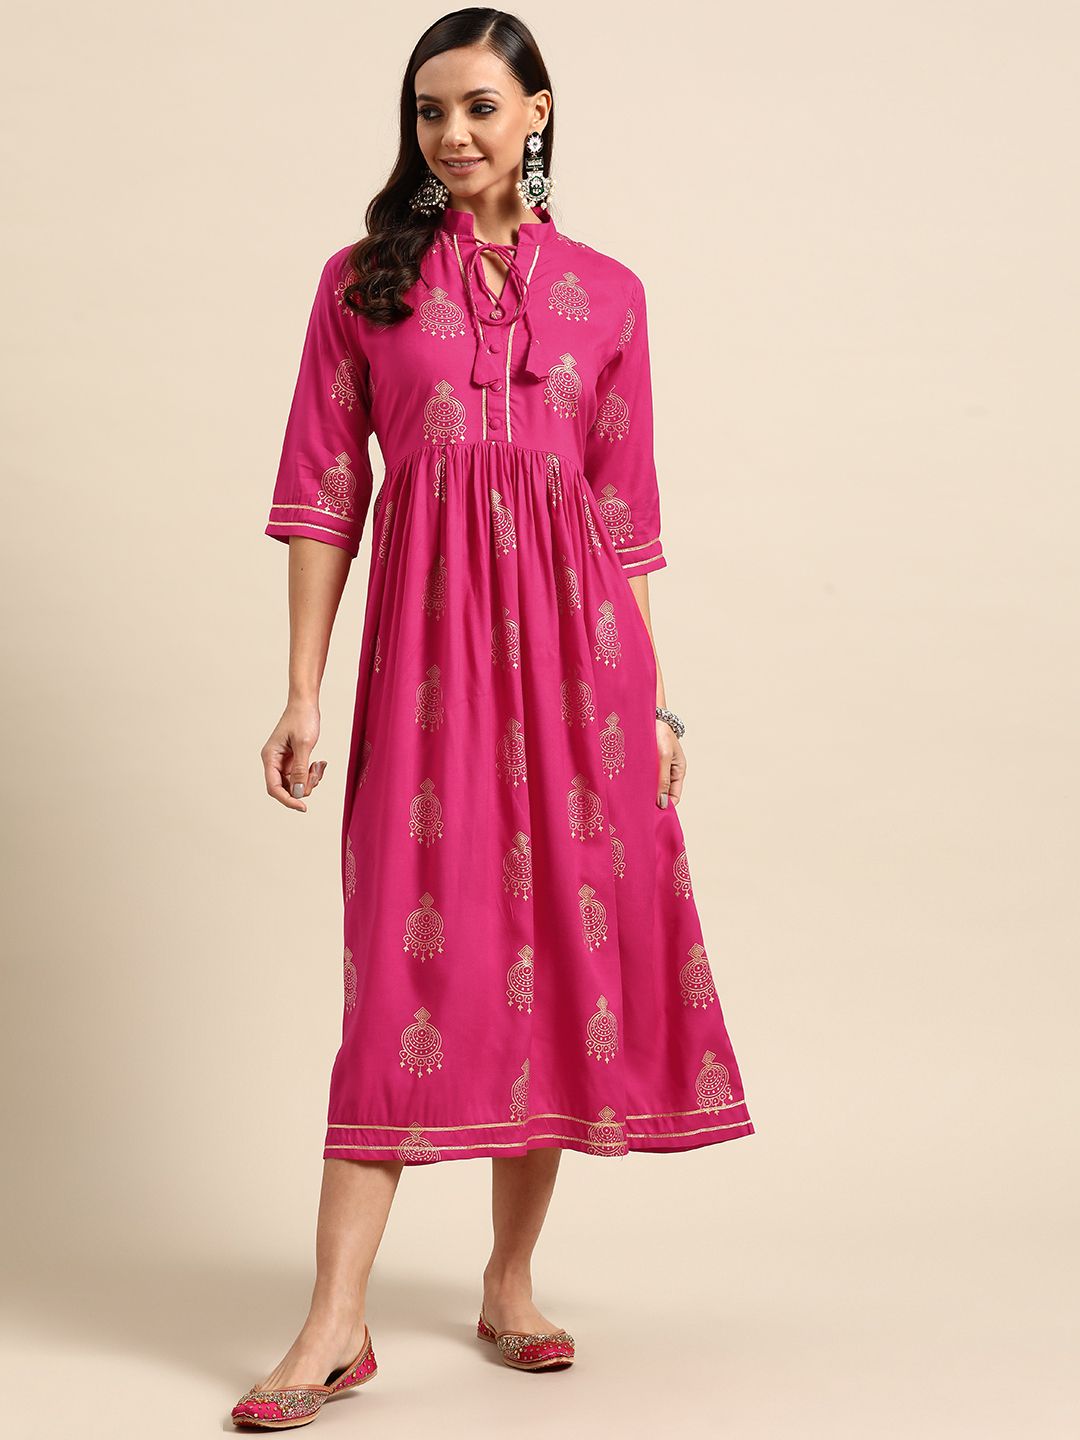 GERUA Pink & Gold-Toned Ethnic Motifs Ethnic Midi Dress Price in India